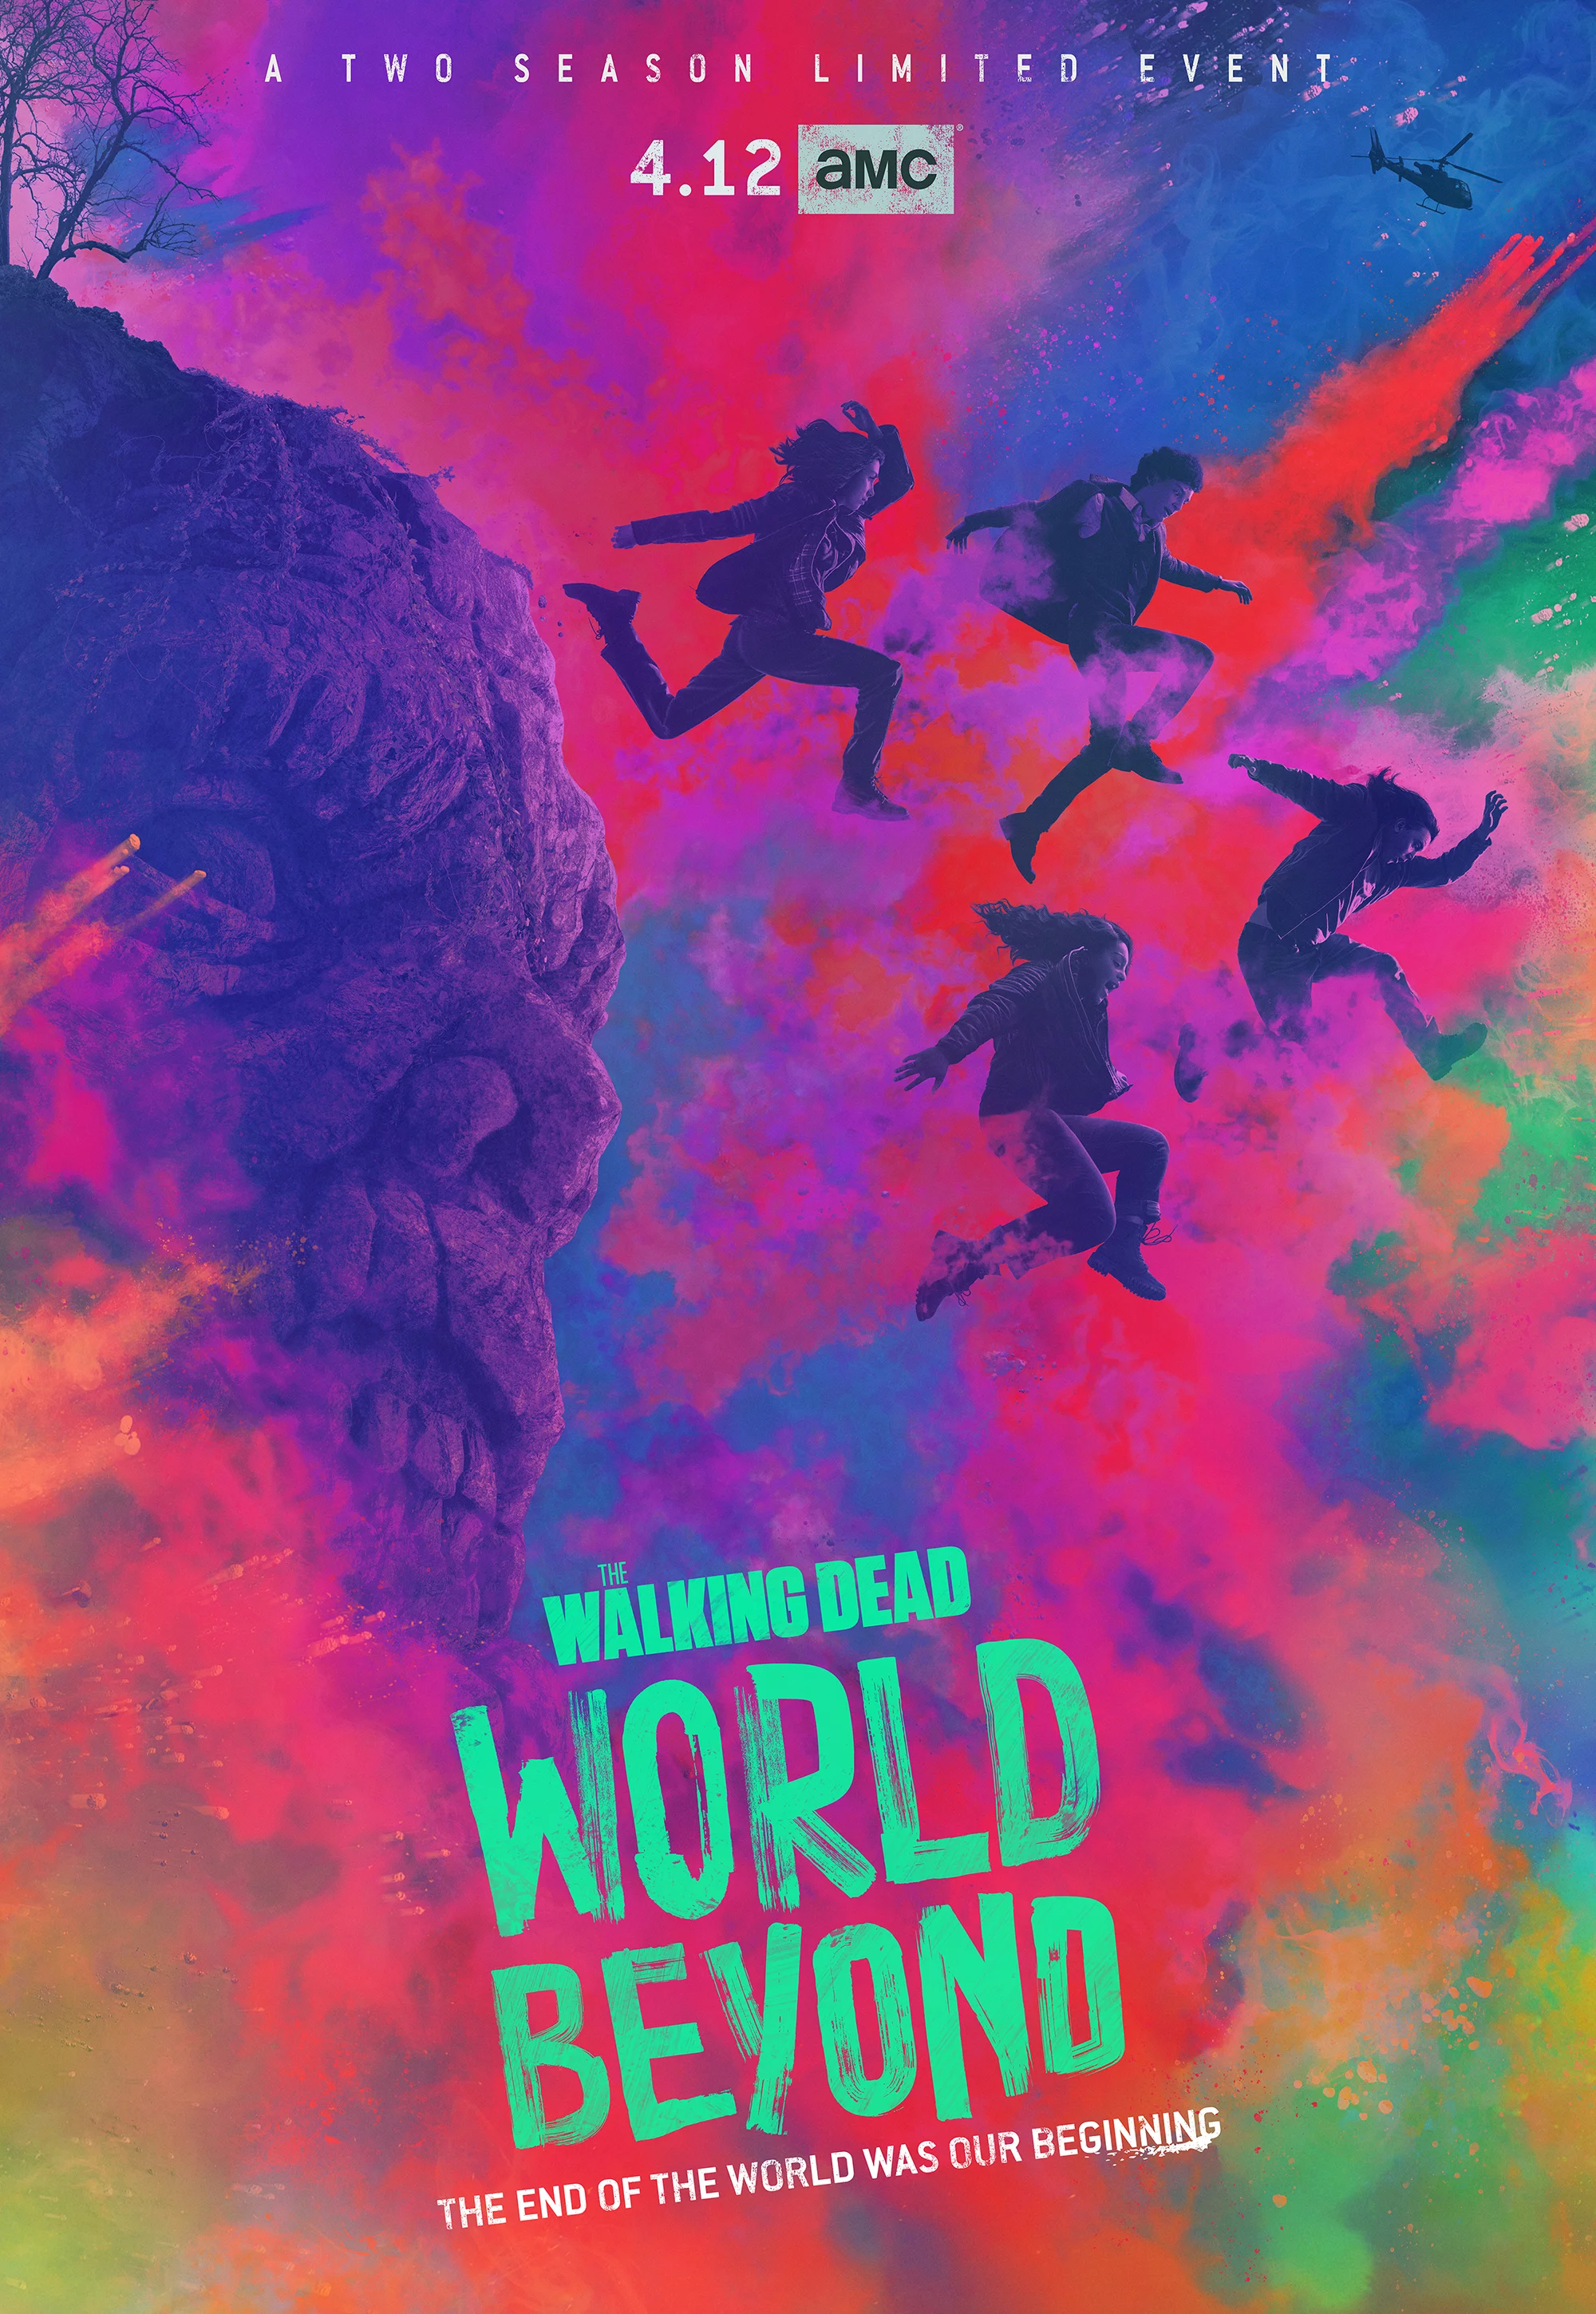 The Walking Dead World Beyond Poster TV Series Art Print Size 11x17" 24 x36" - $10.90 - $24.90